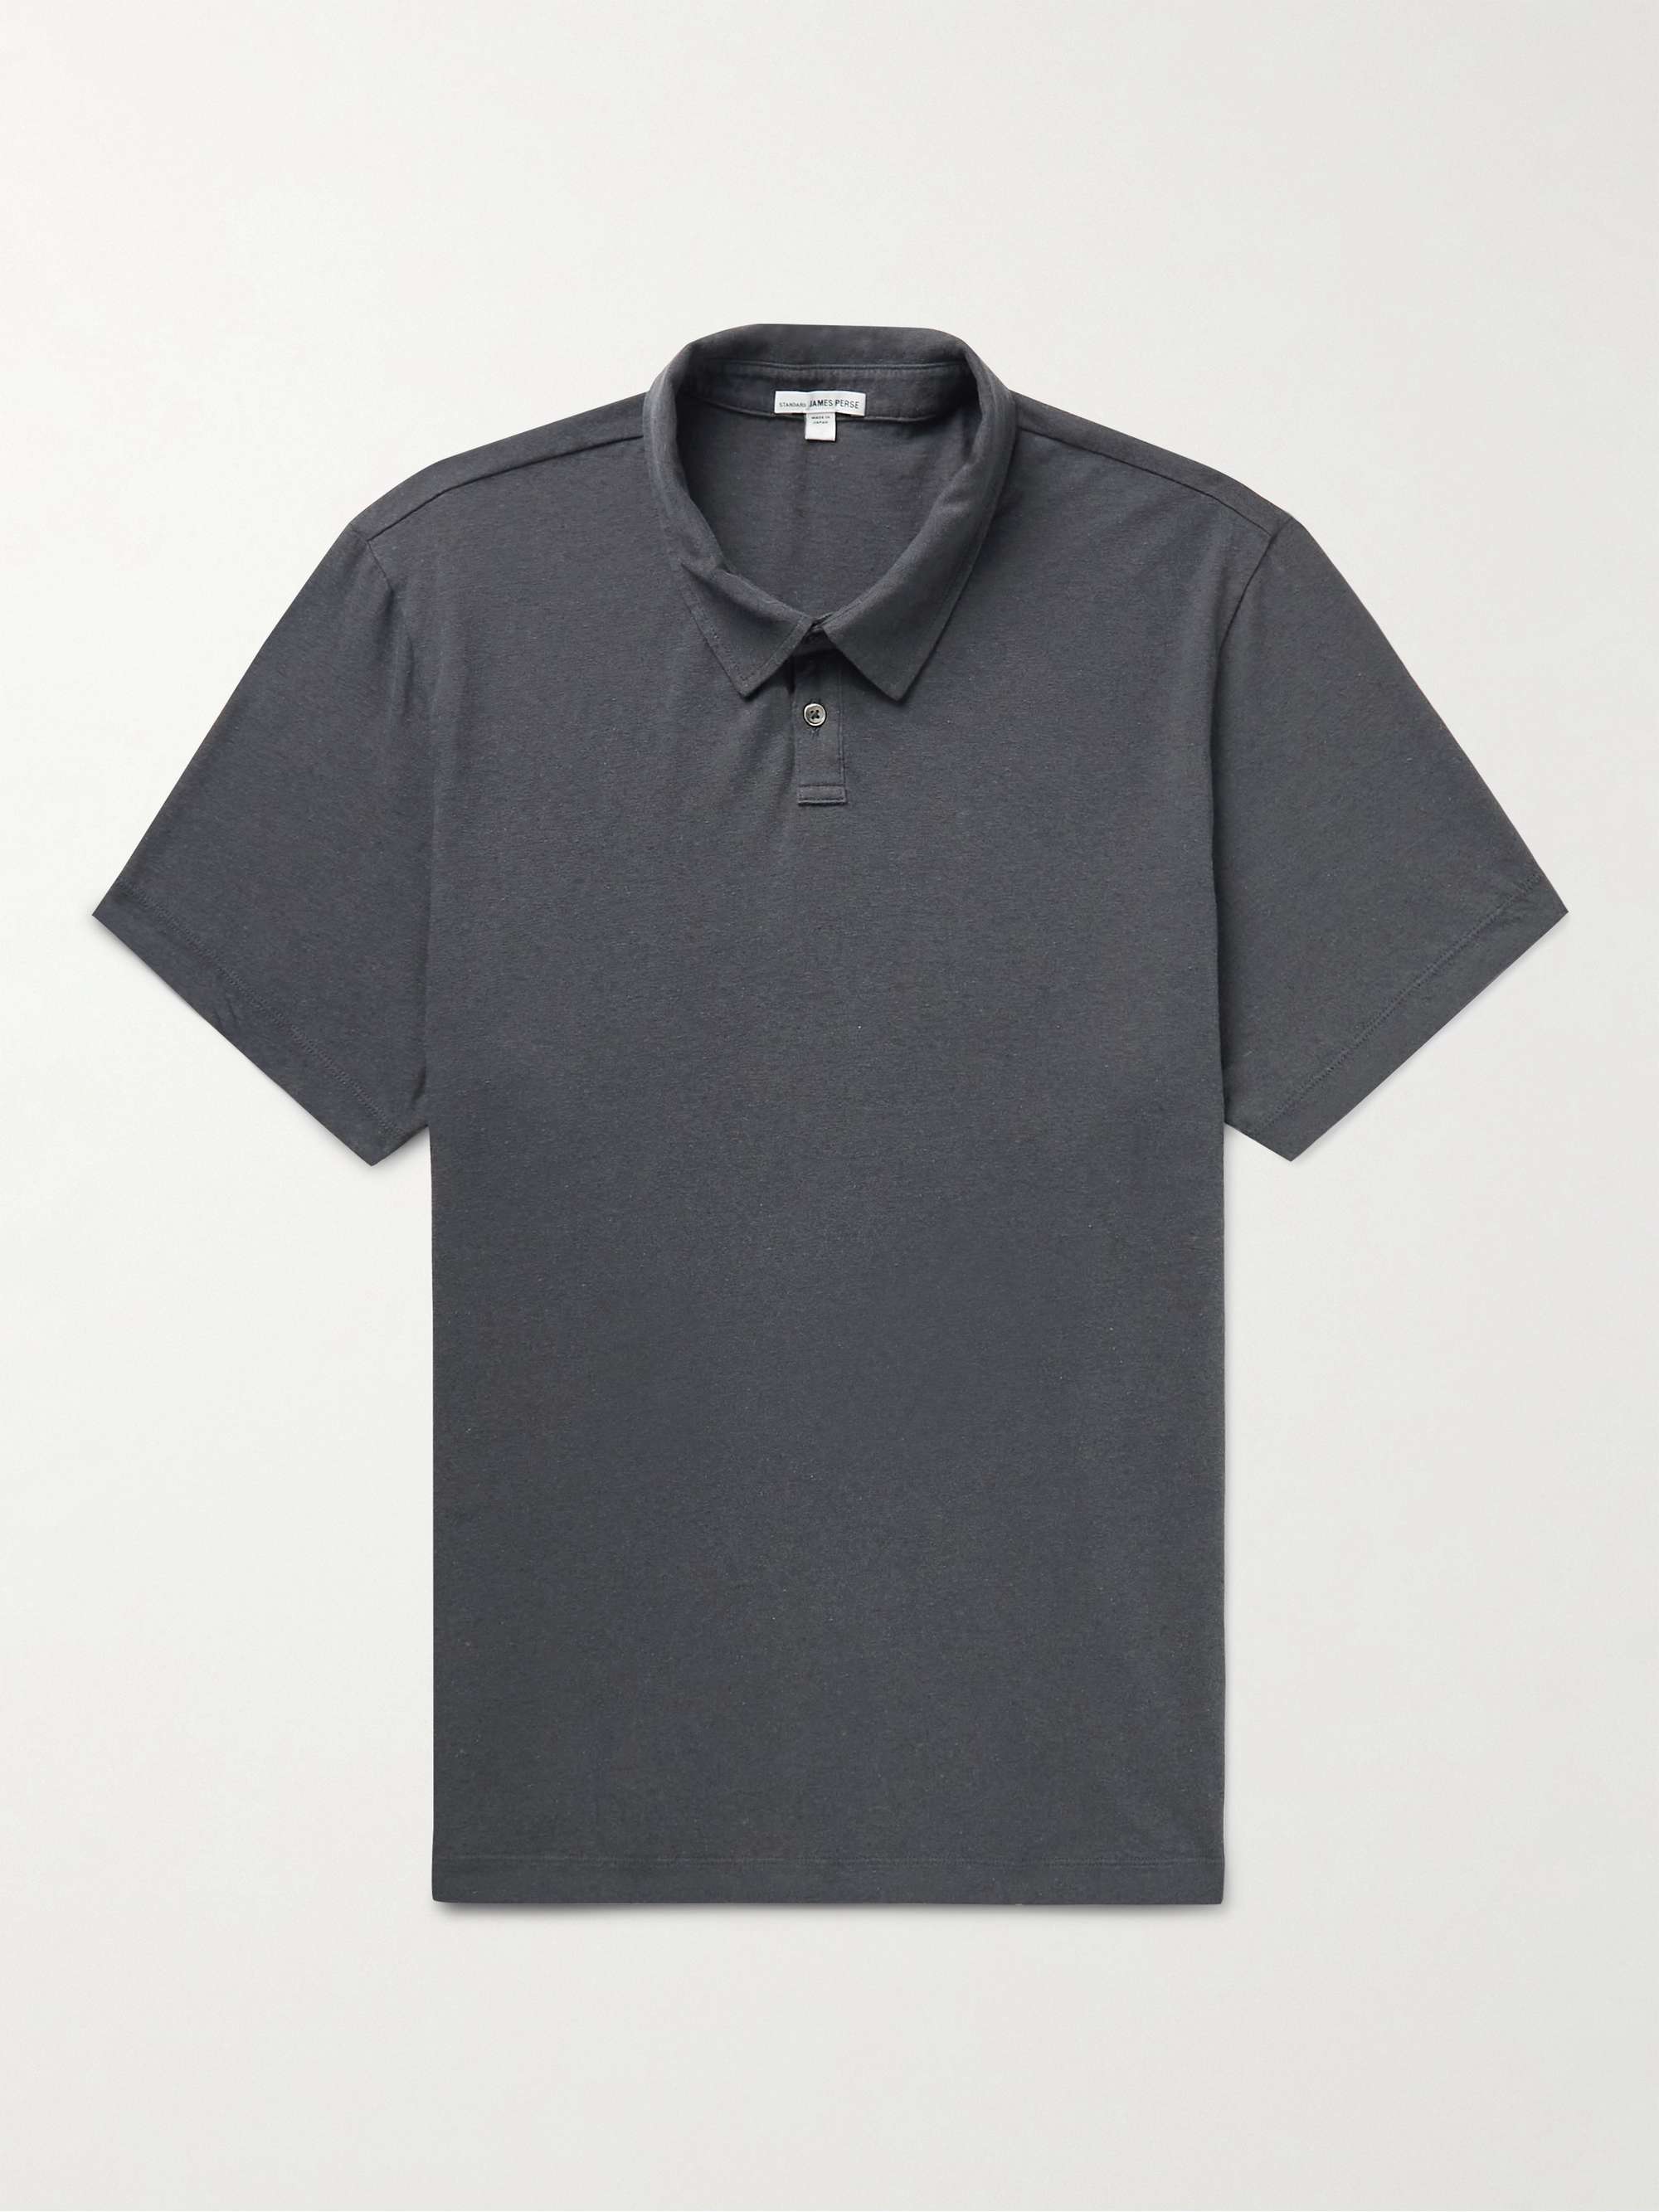 JAMES PERSE Slub Cotton and Linen-Blend Jersey Polo Shirt